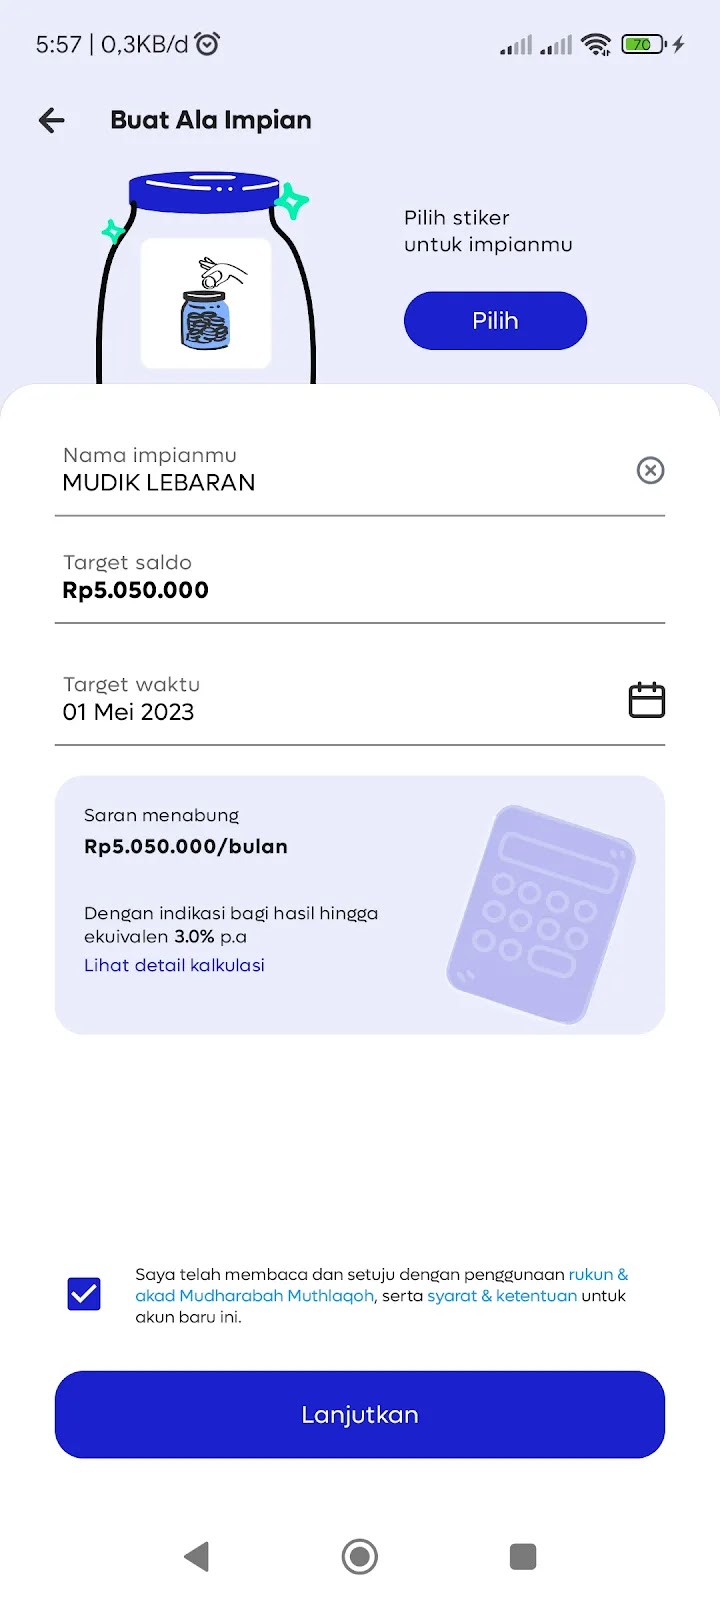 Promo Terbaru Bank Aladin 2023: Nabung Ala Impian dapat Reward e-Voucher Alfamart hingga Rp 500rb!